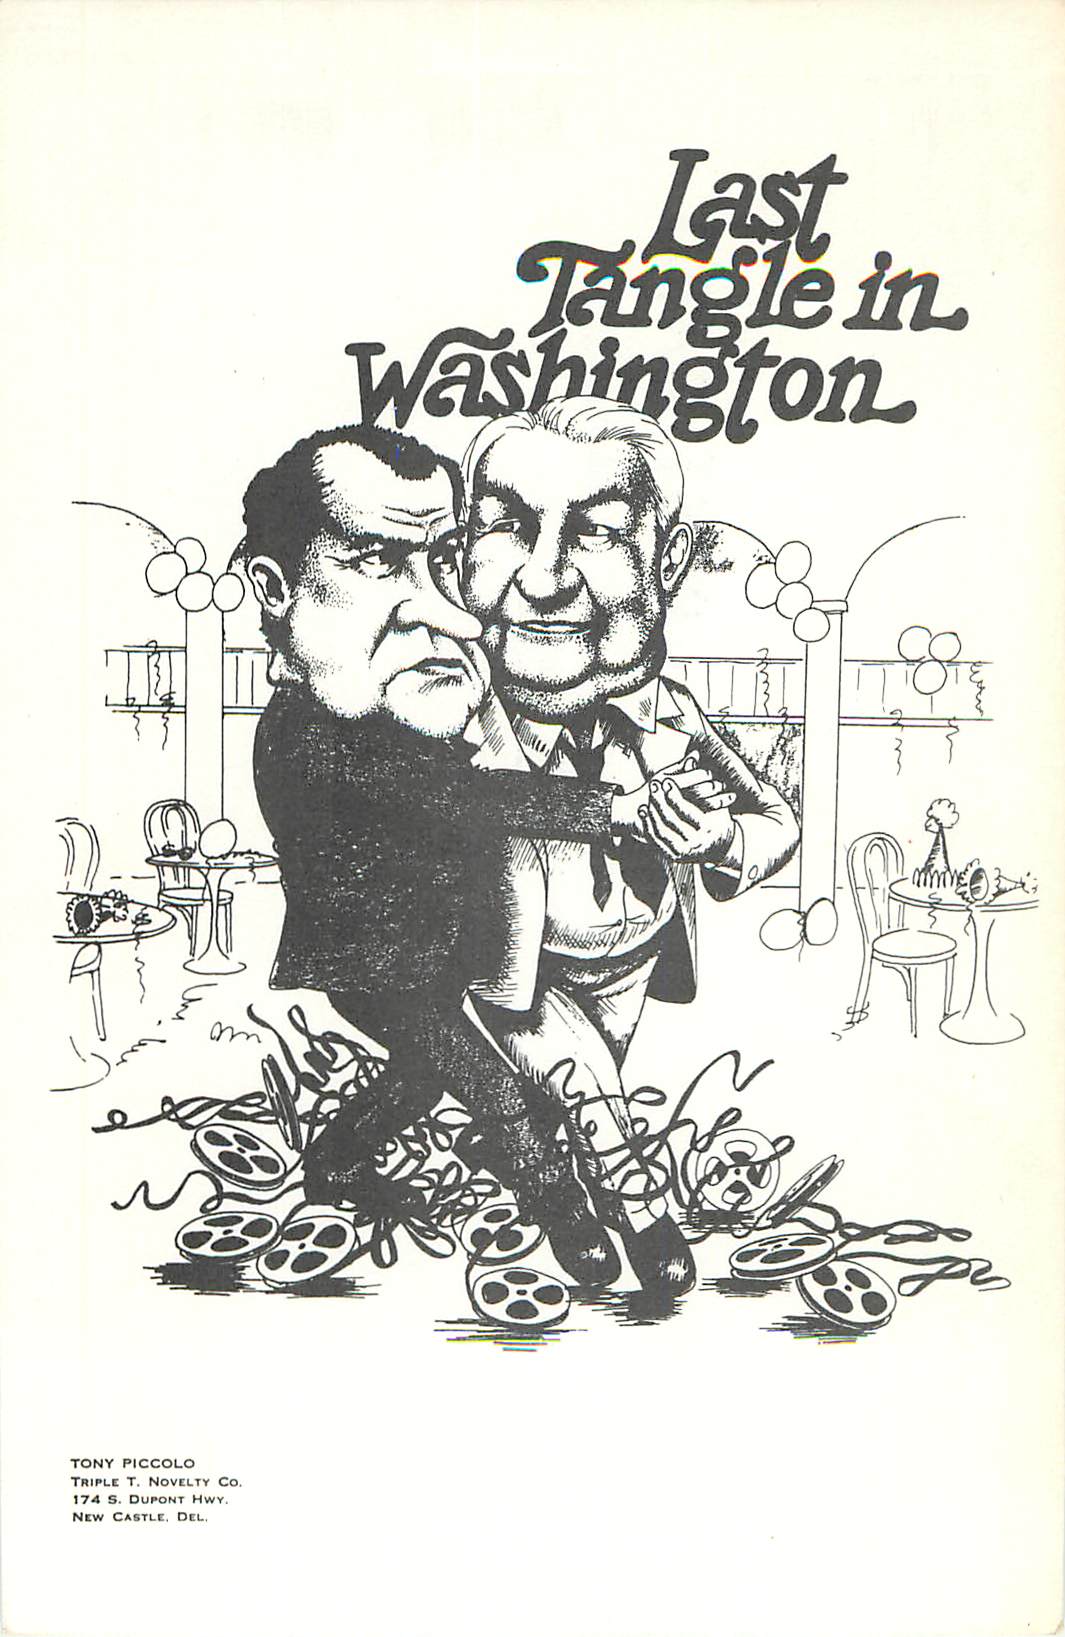 "Last Tangle in Washington"